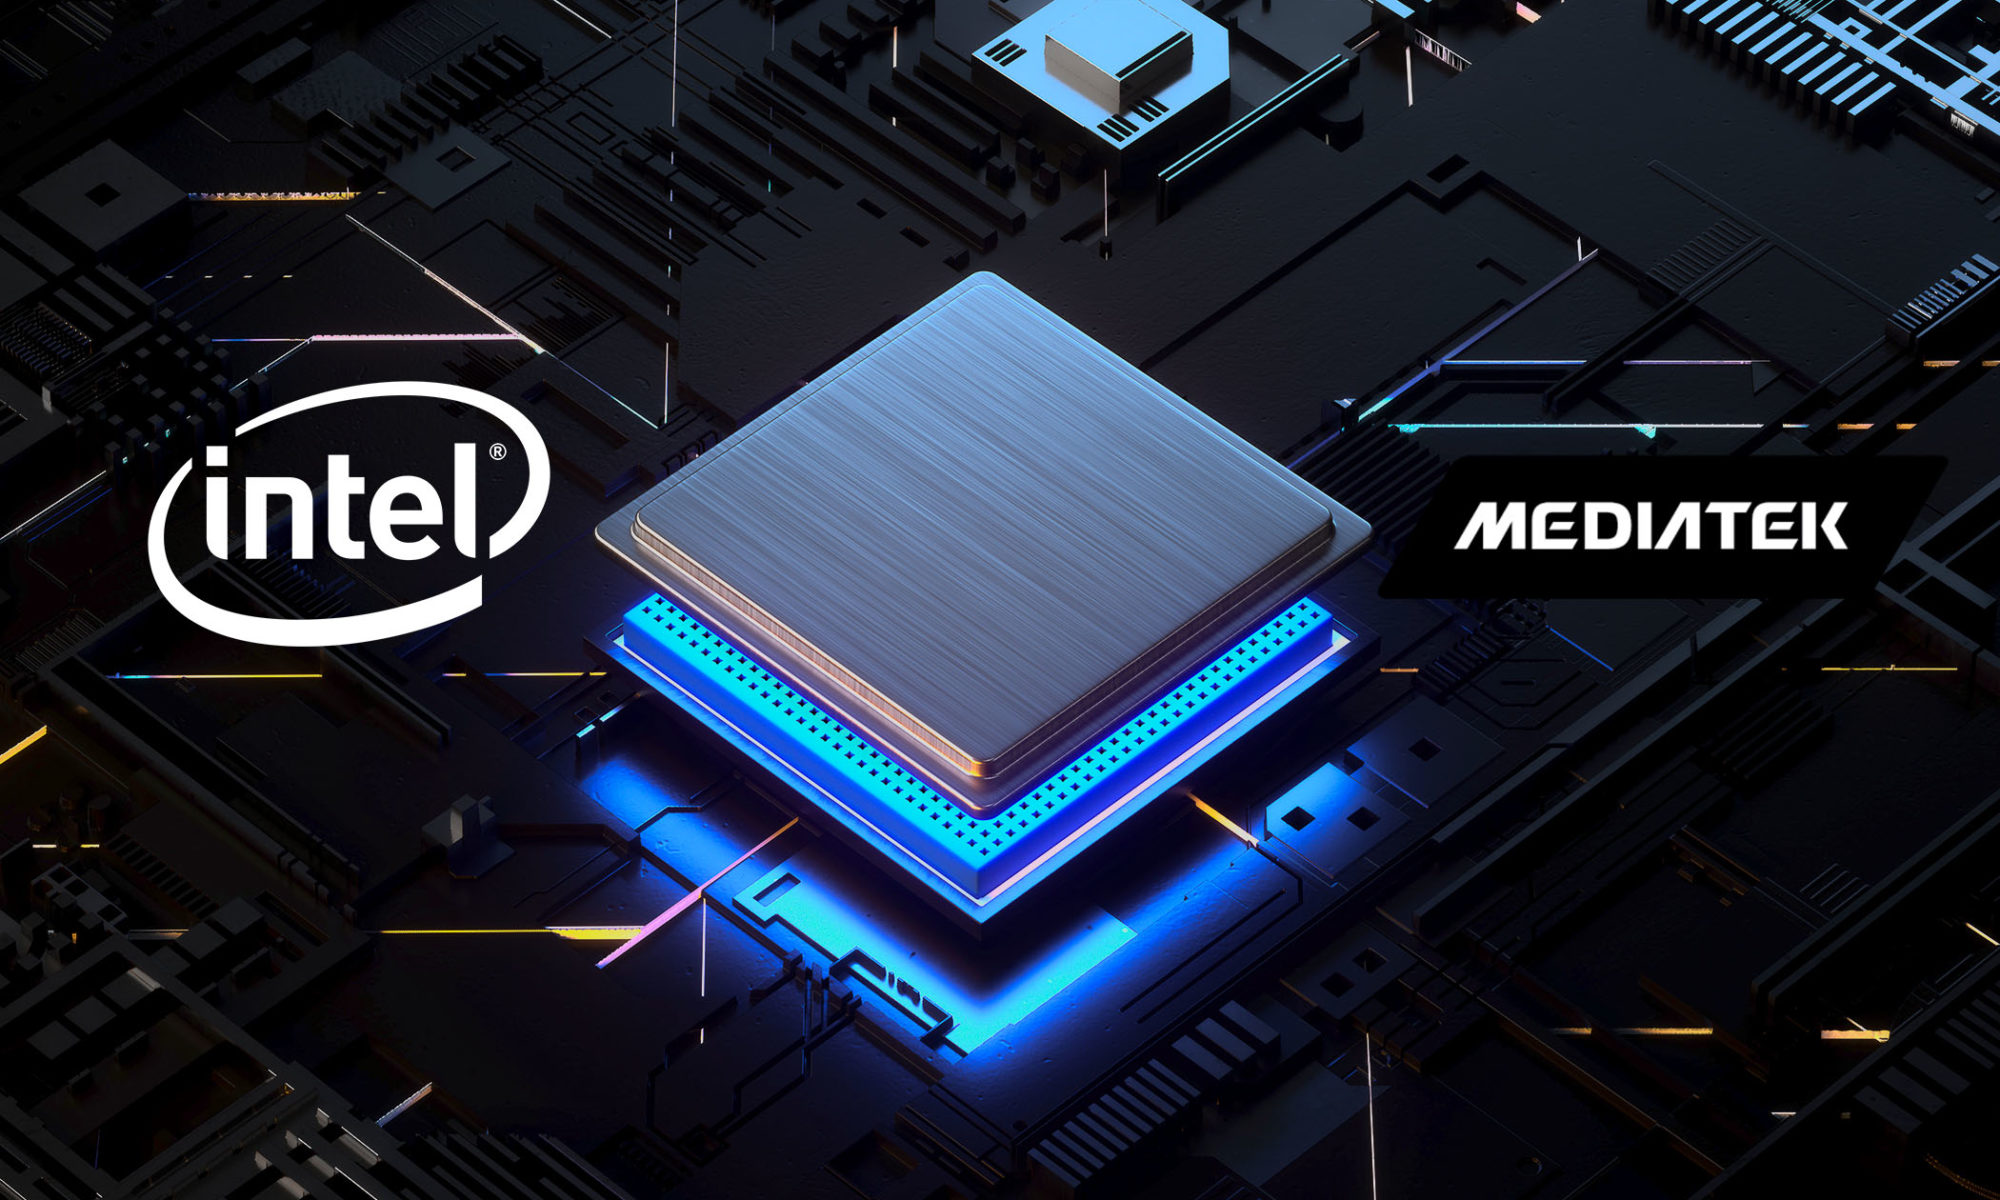 Intel Foundry and MediaTek